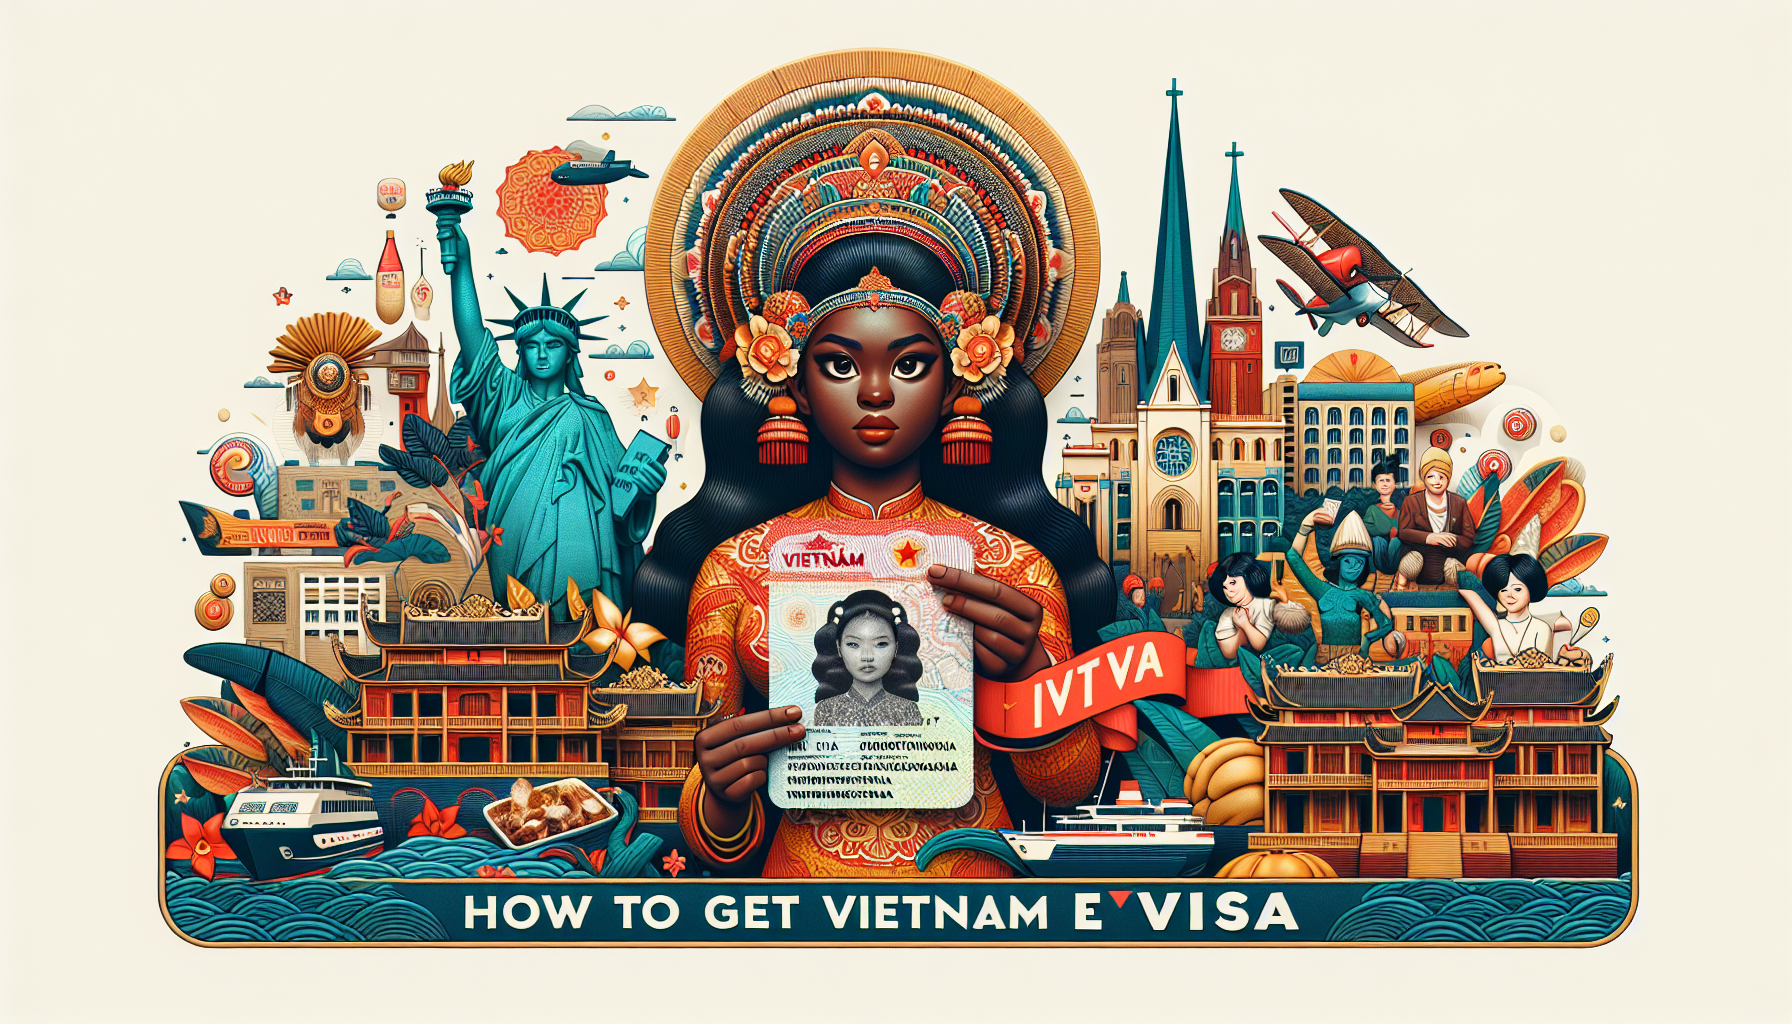 Vietnam Evisa for Citizens from Guinea